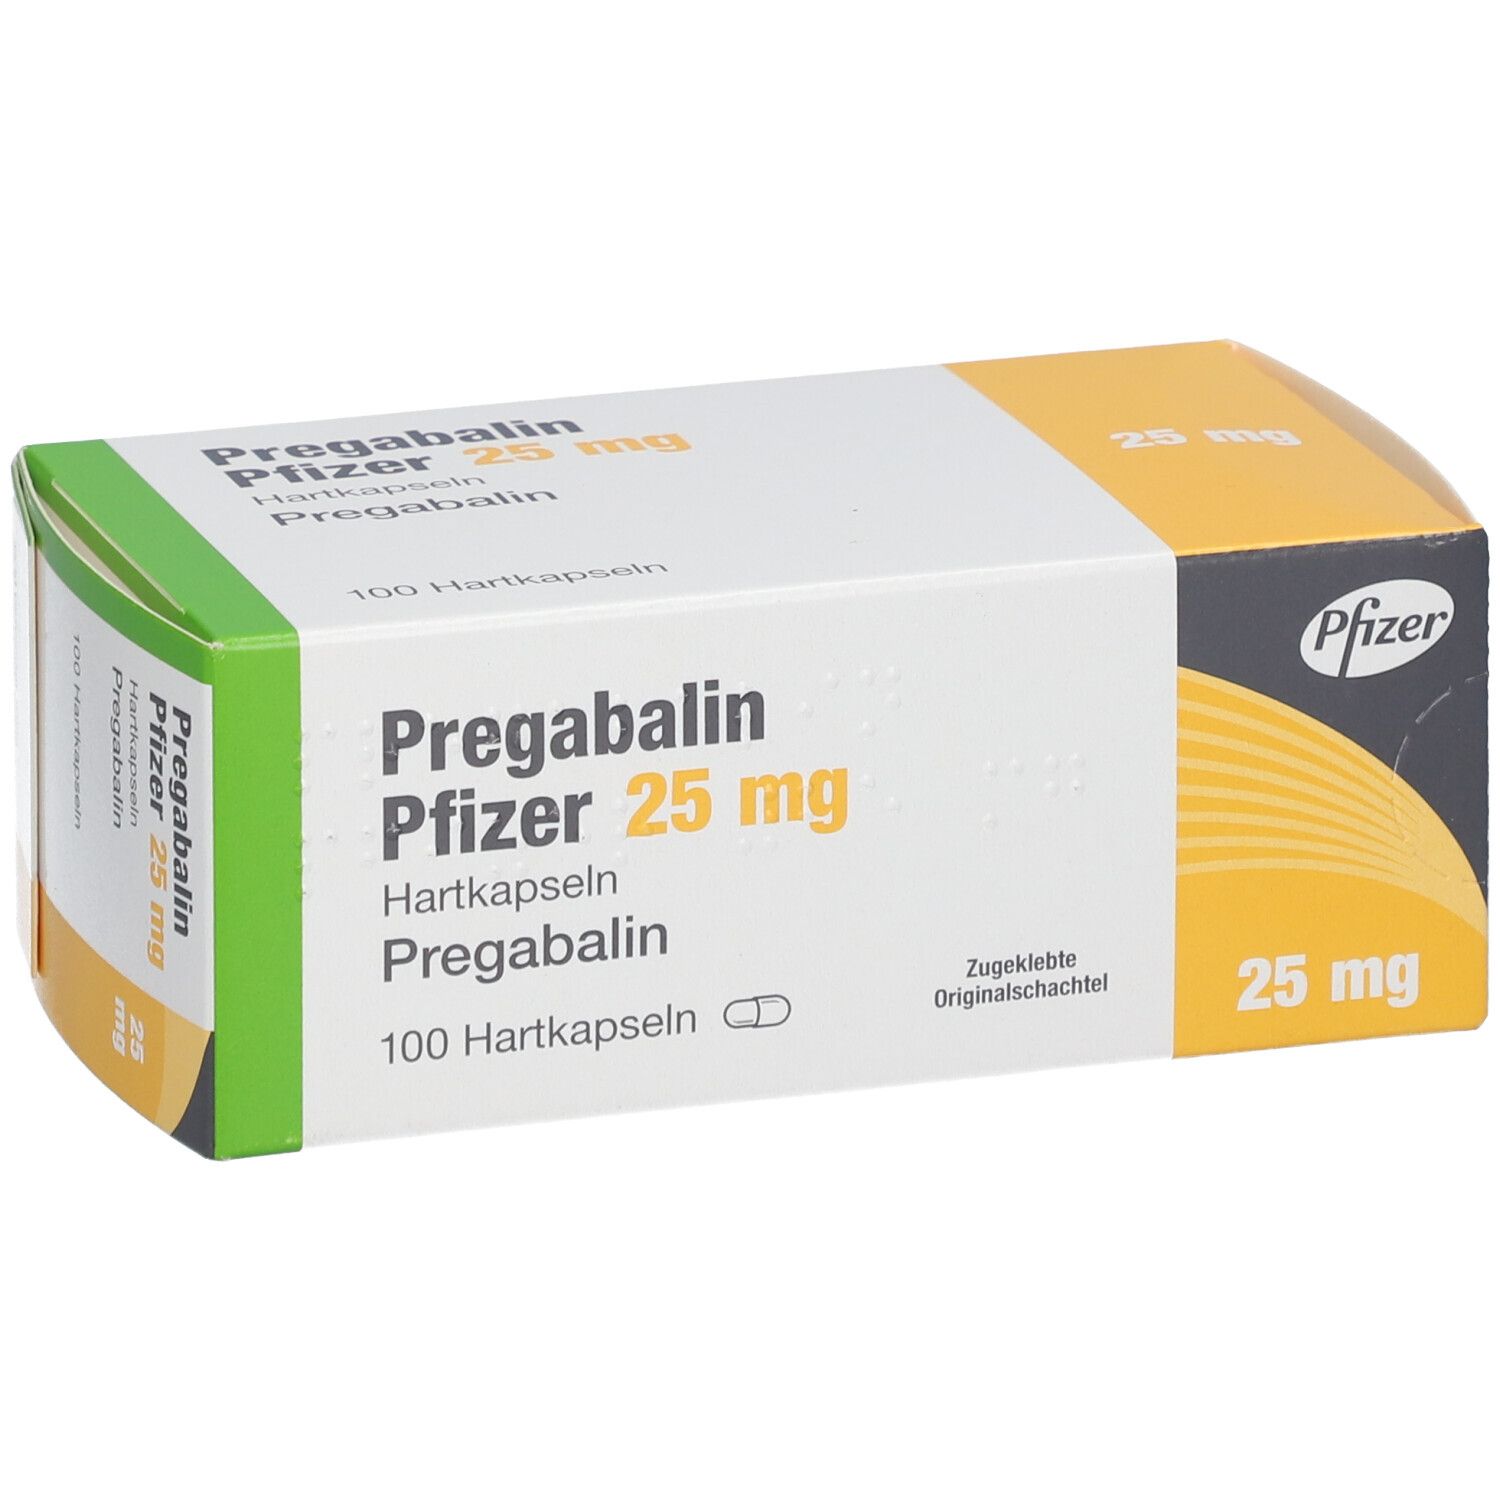 Pregabalin Pfizer 25 mg